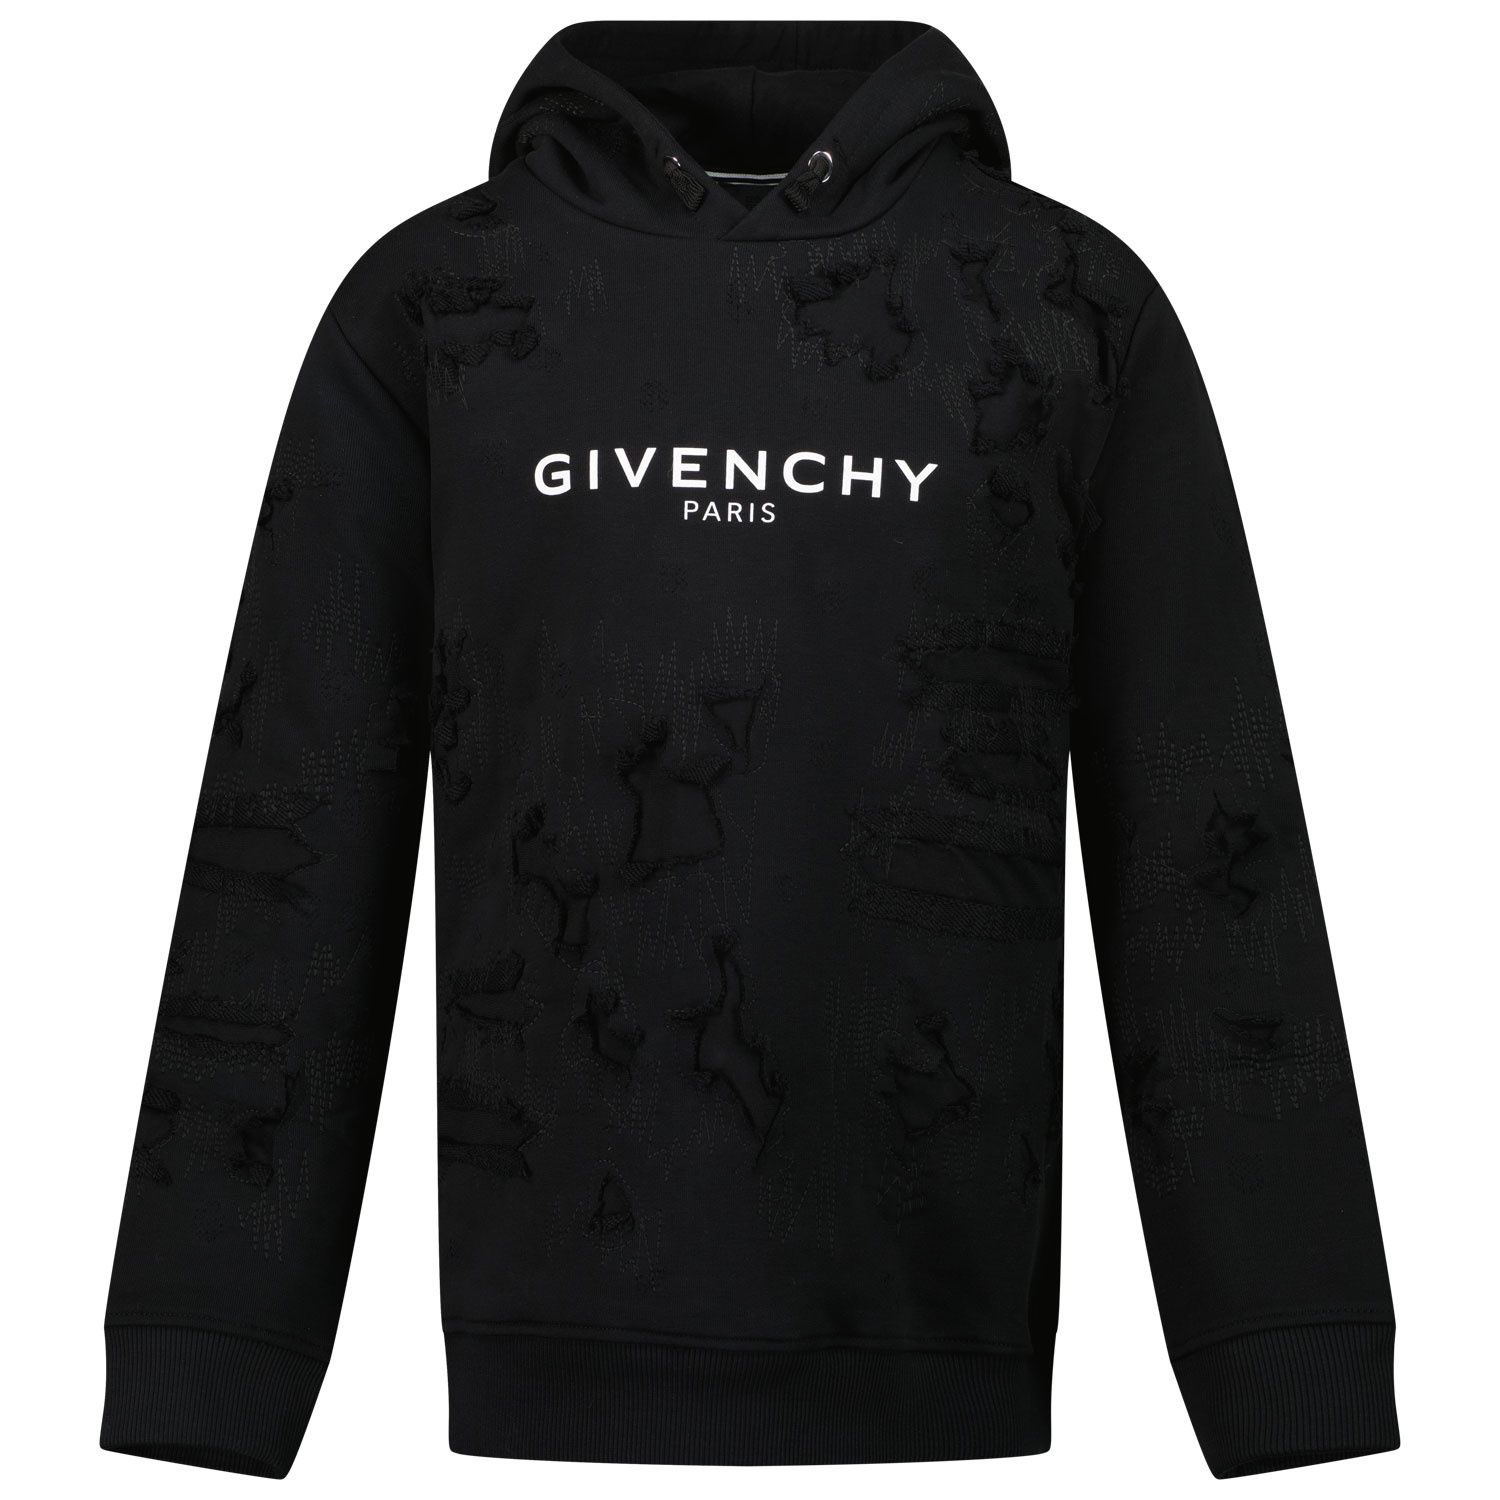 Afbeelding van Givenchy H25317 kindertrui zwart